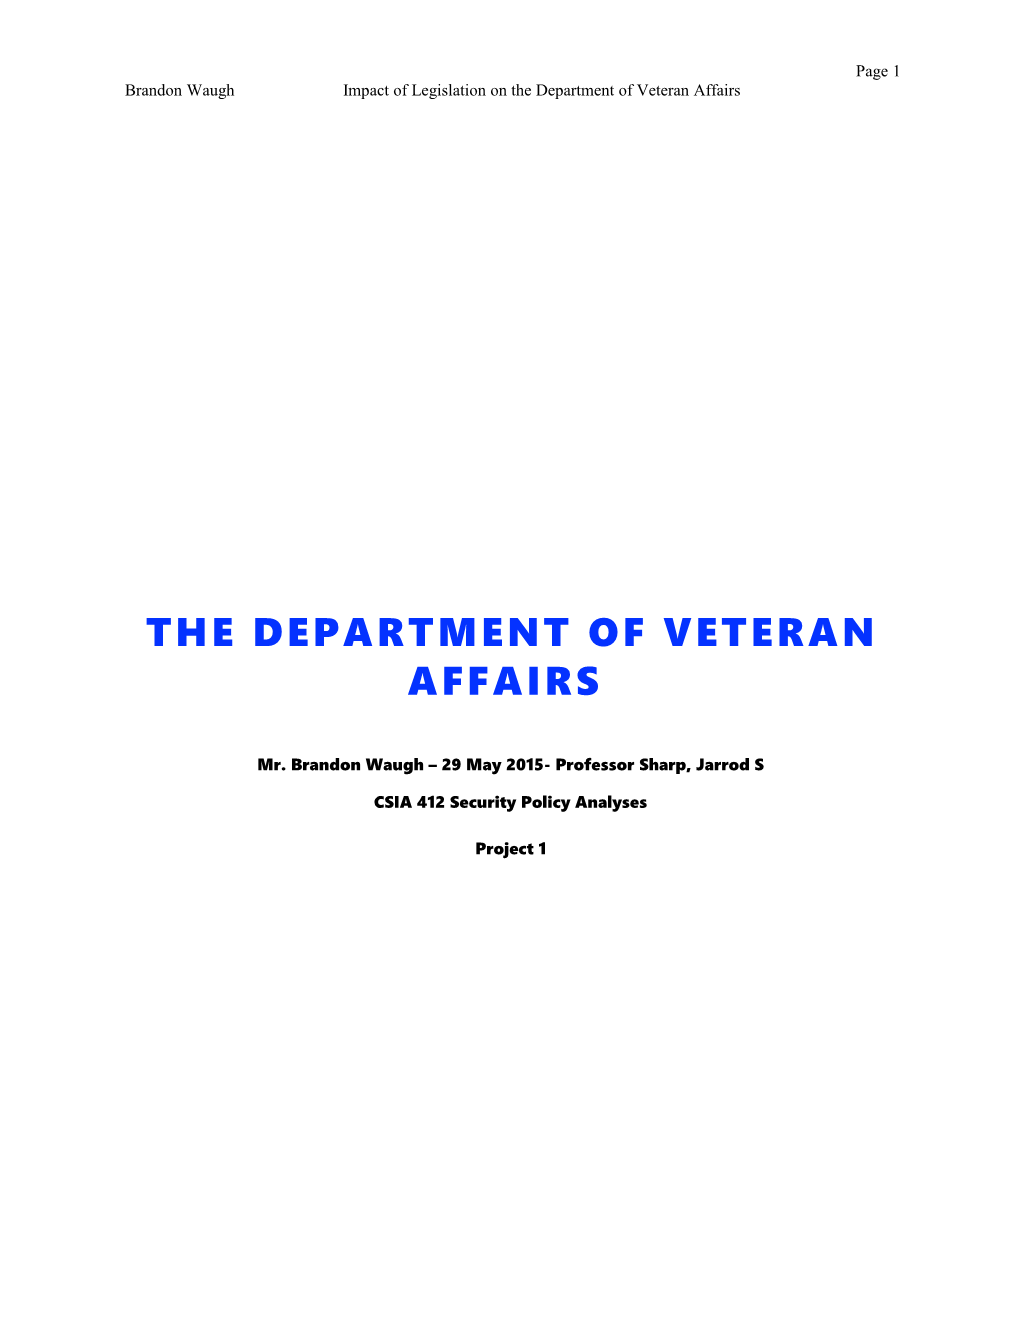 Brandon Waugh Impact of Legislation on the Department of Veteran Affairs